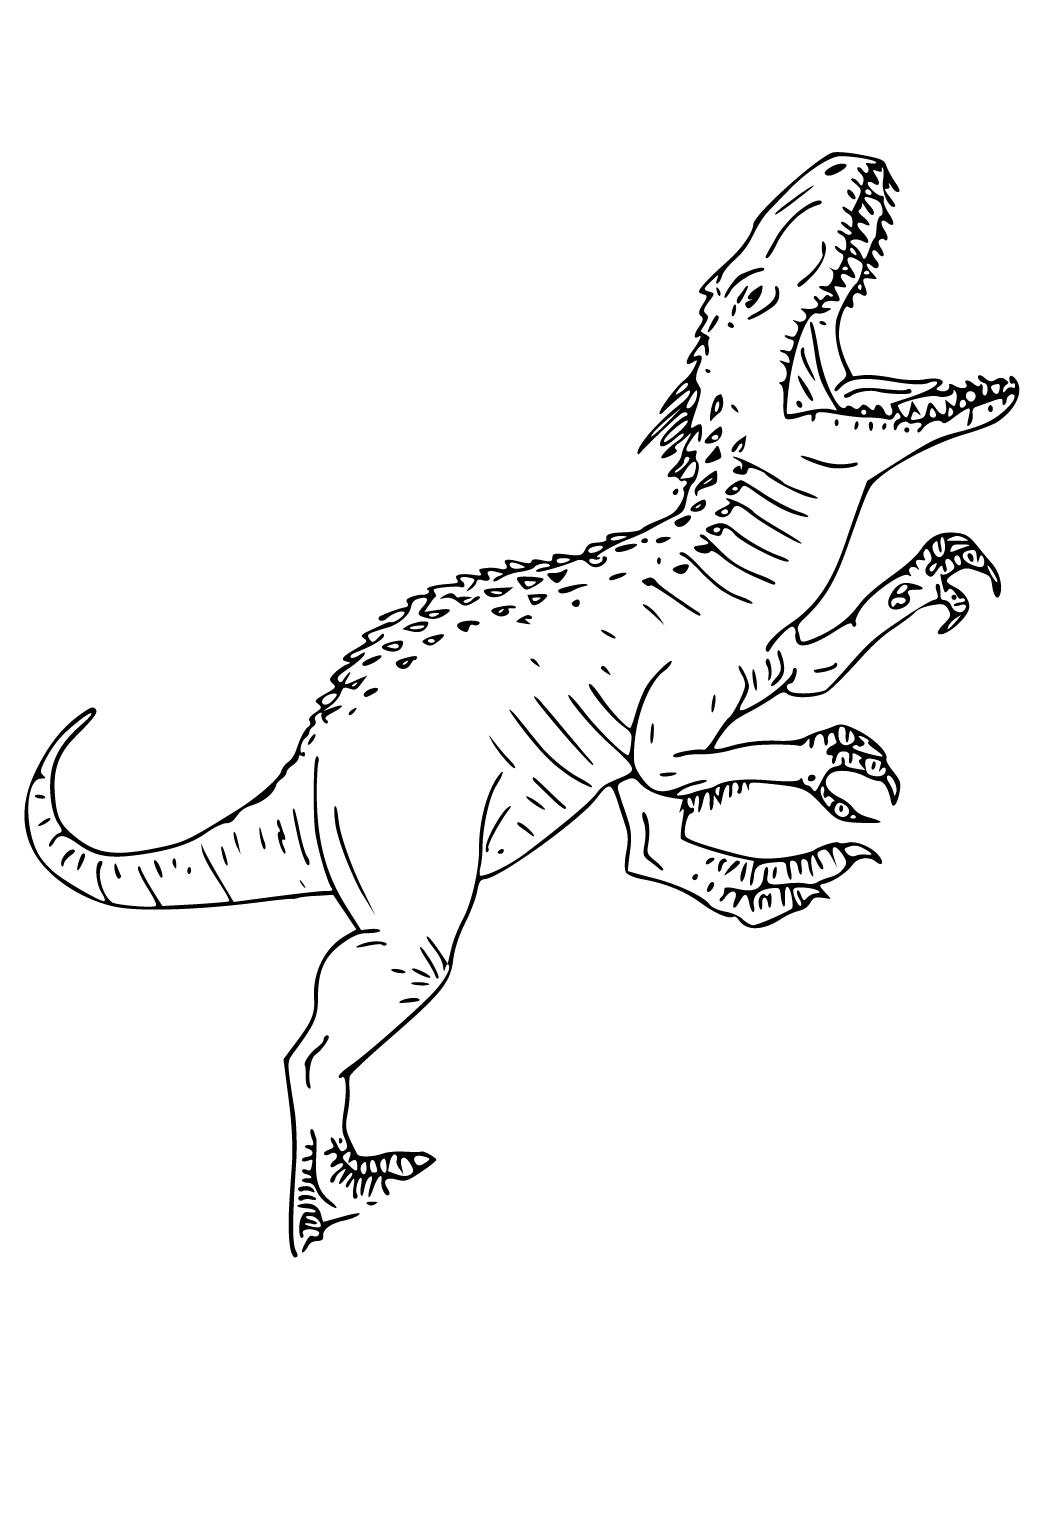 Alosaurio